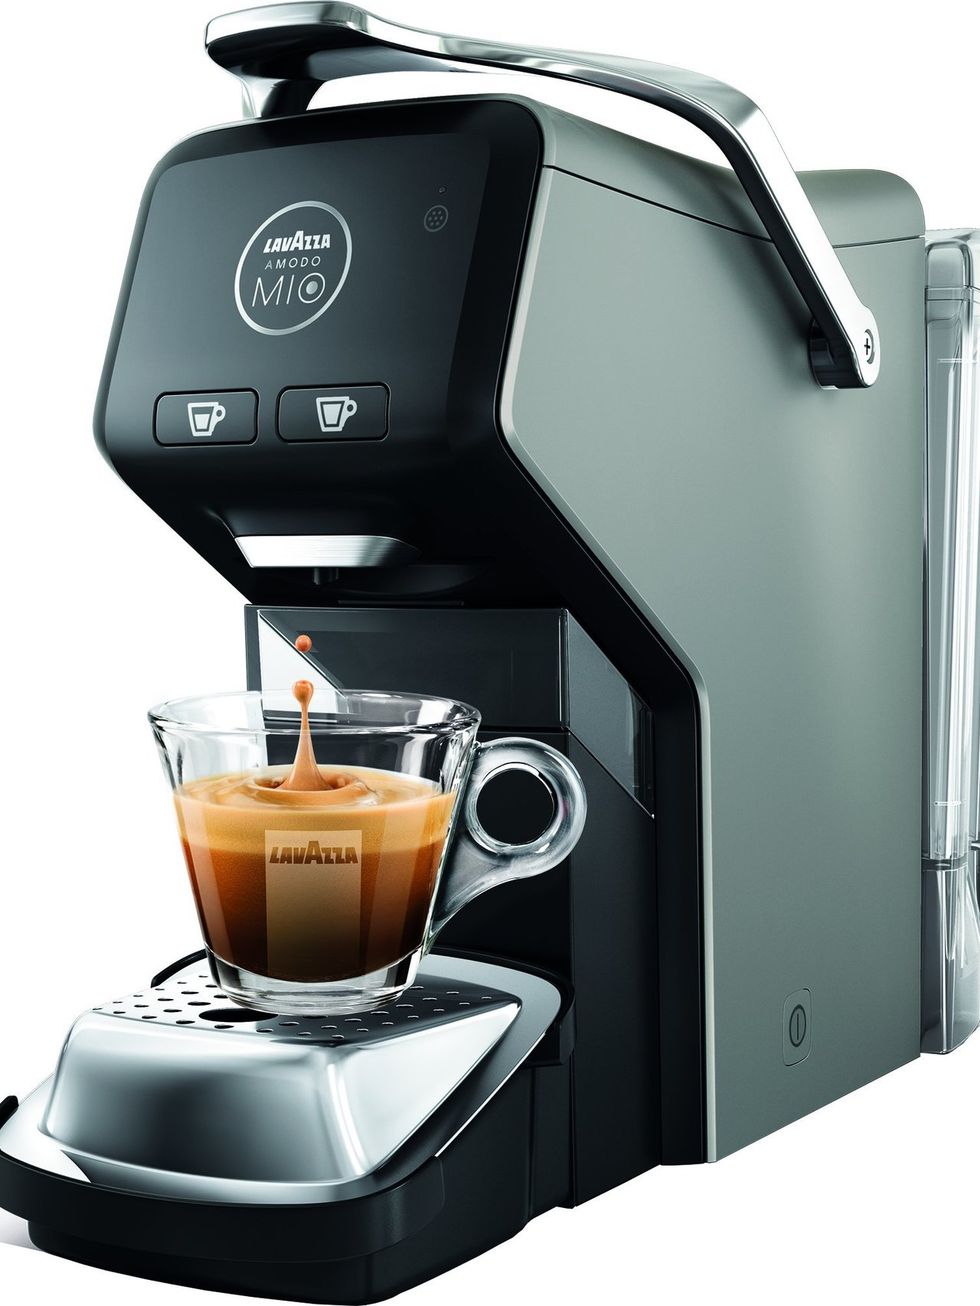 Product, Liquid, Drink, Serveware, Coffee, Tableware, Espresso, Drinkware, Small appliance, Machine, 